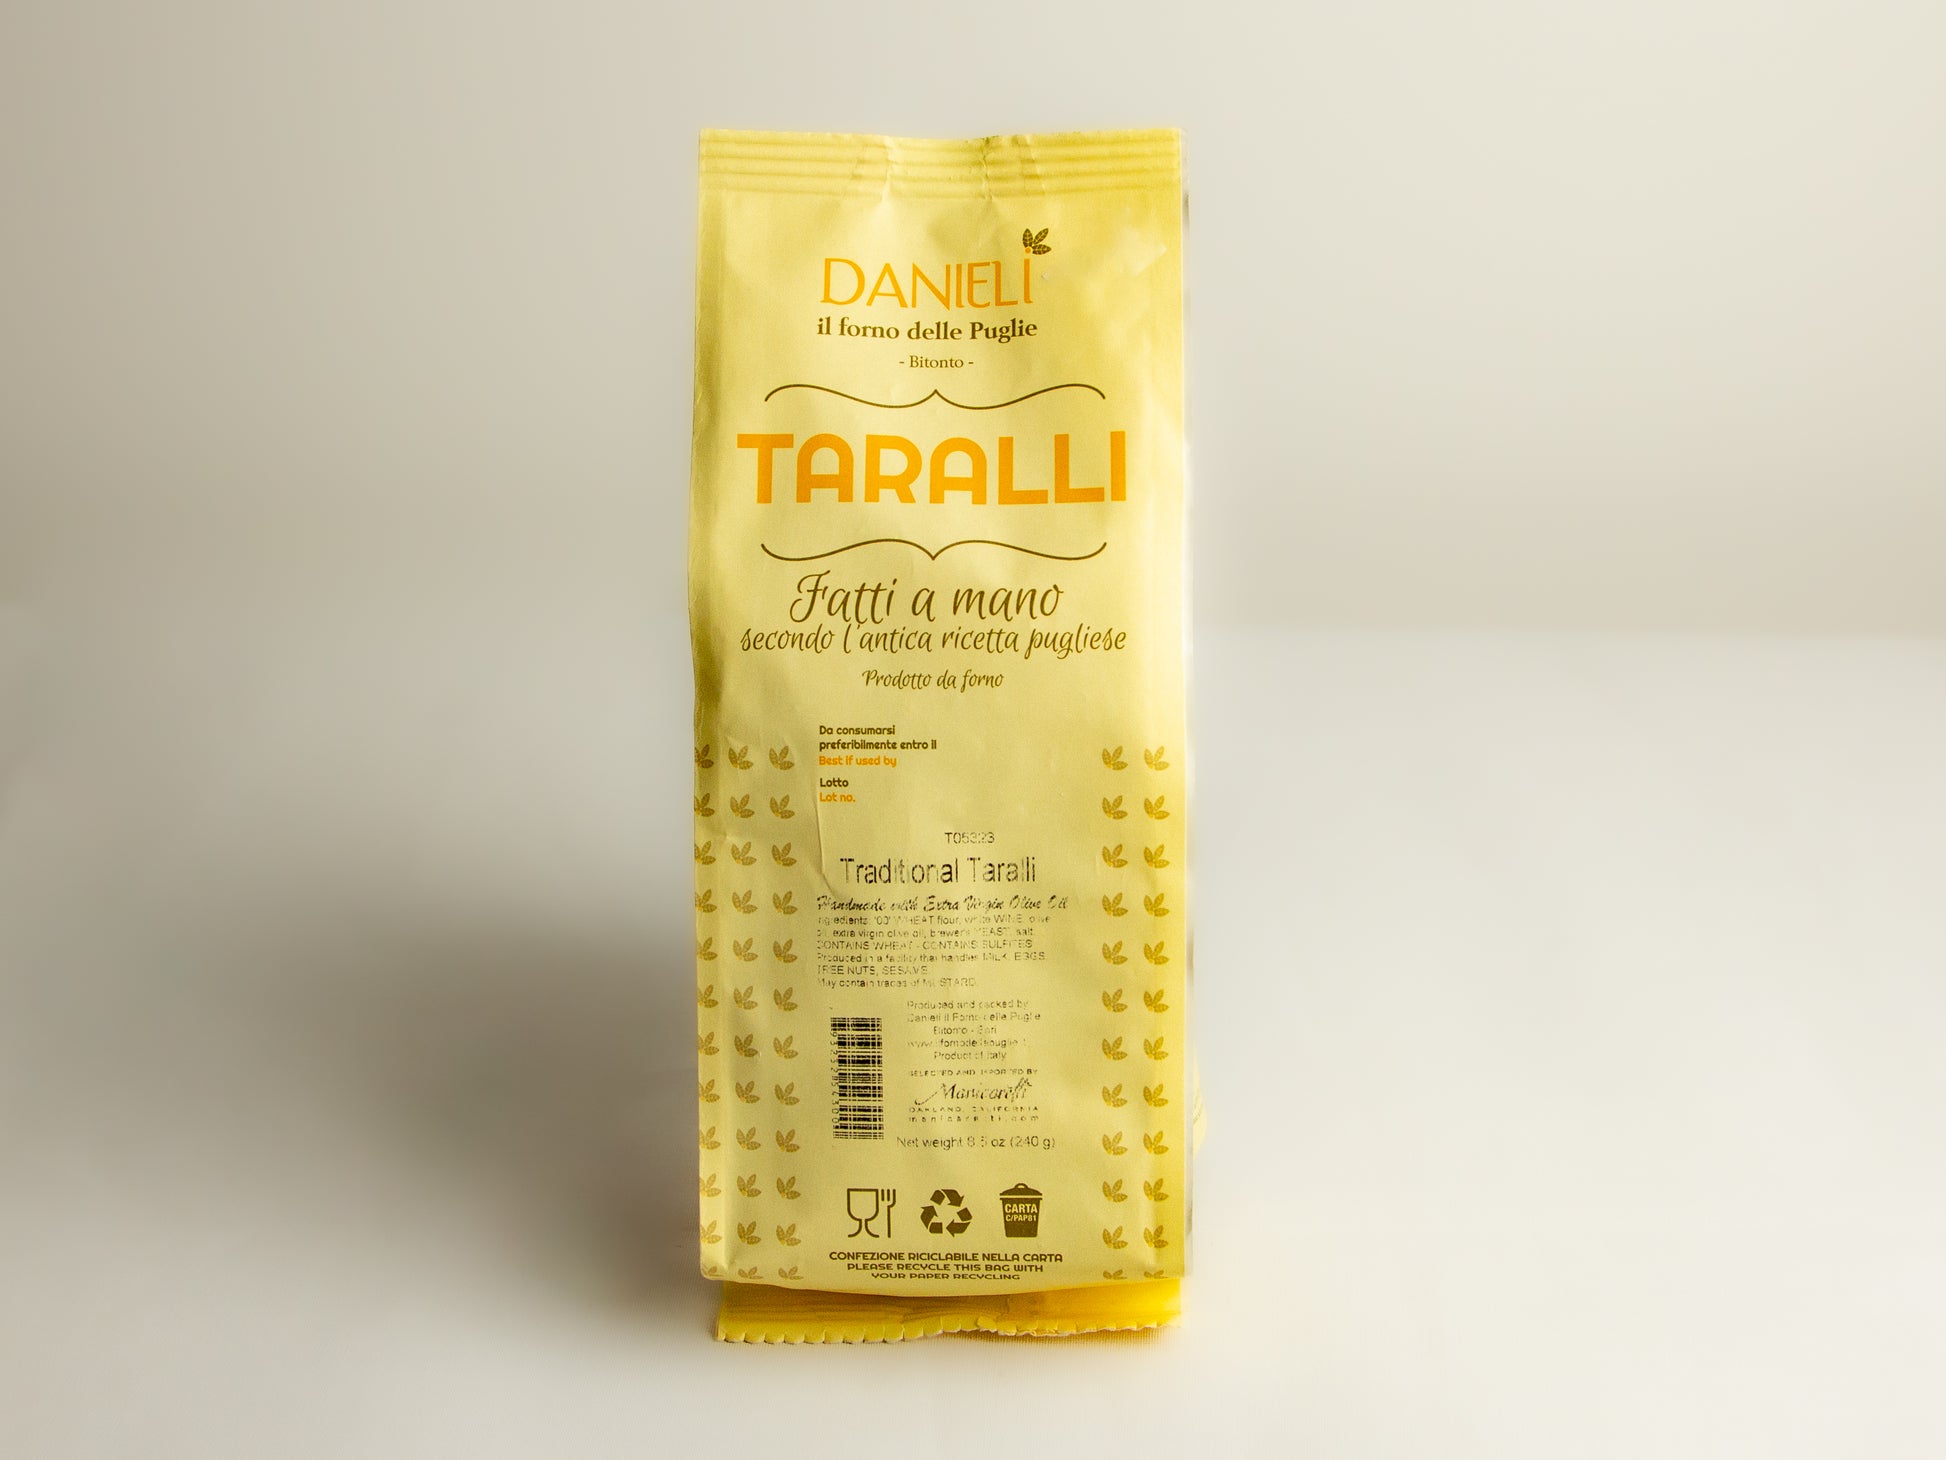 Danieli Traditional Taralli back of bag